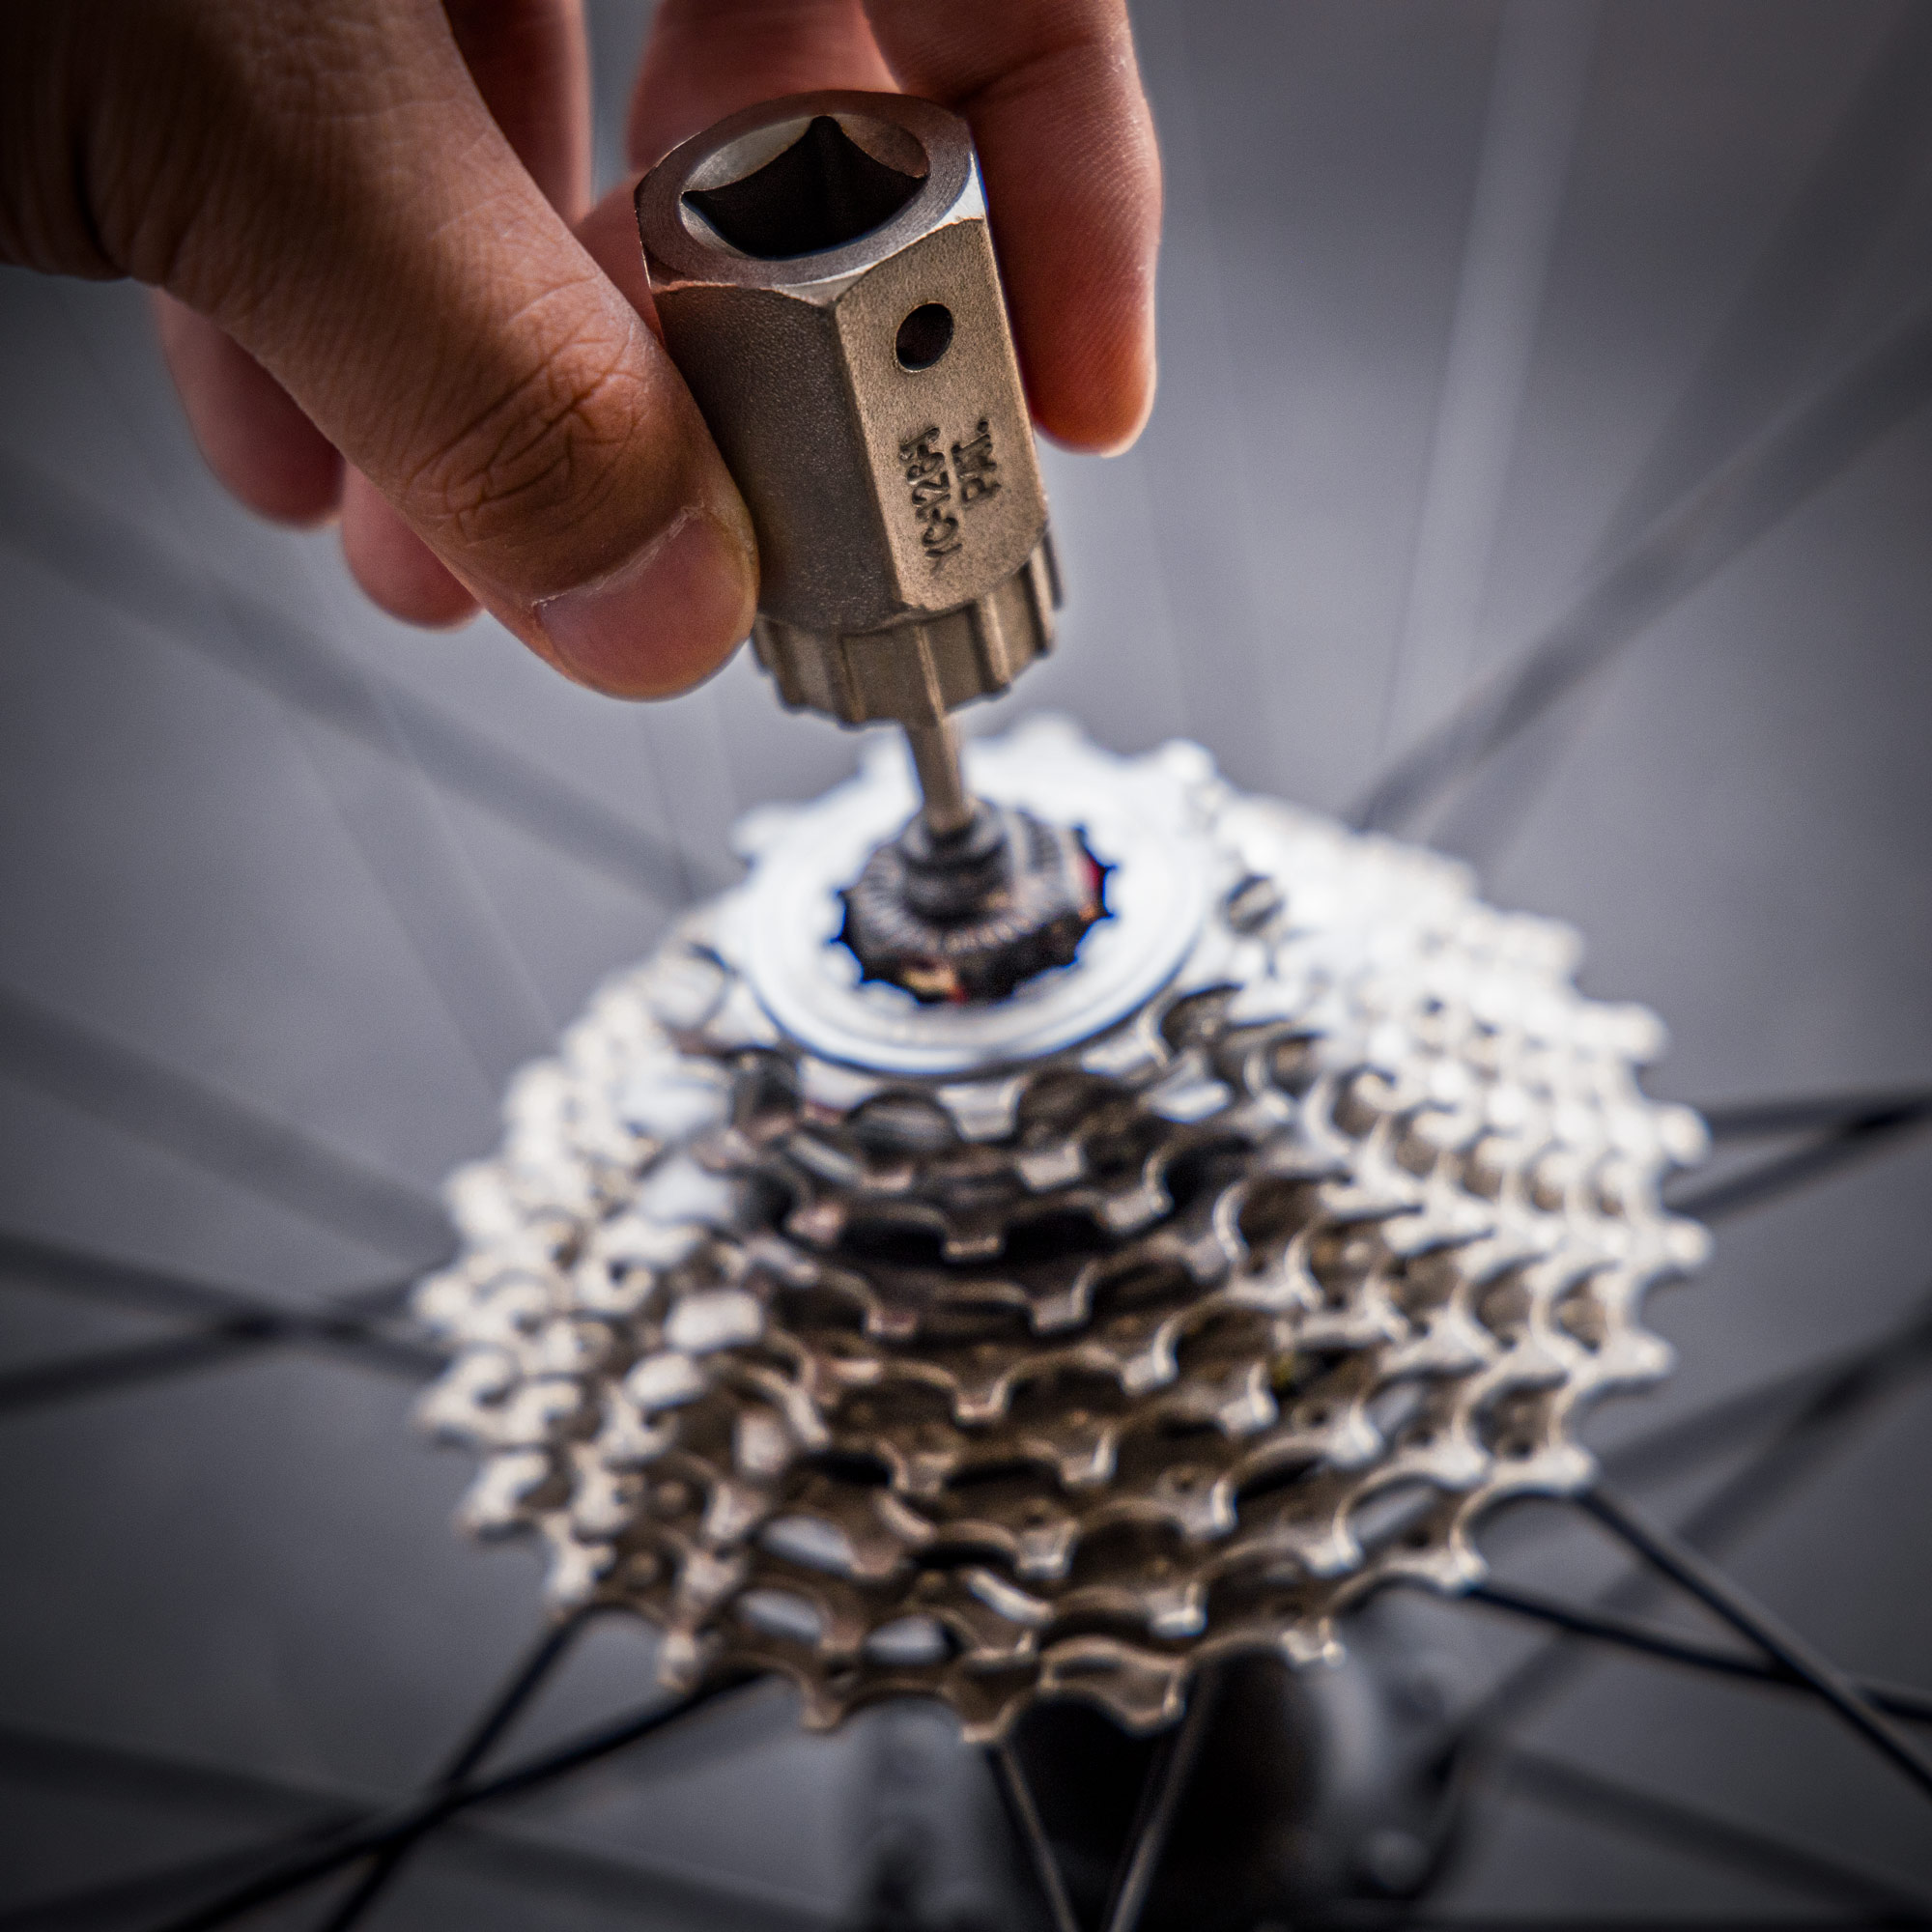 Bike Hand YC-126 Shimano Freewheel Installation and Removal Tool